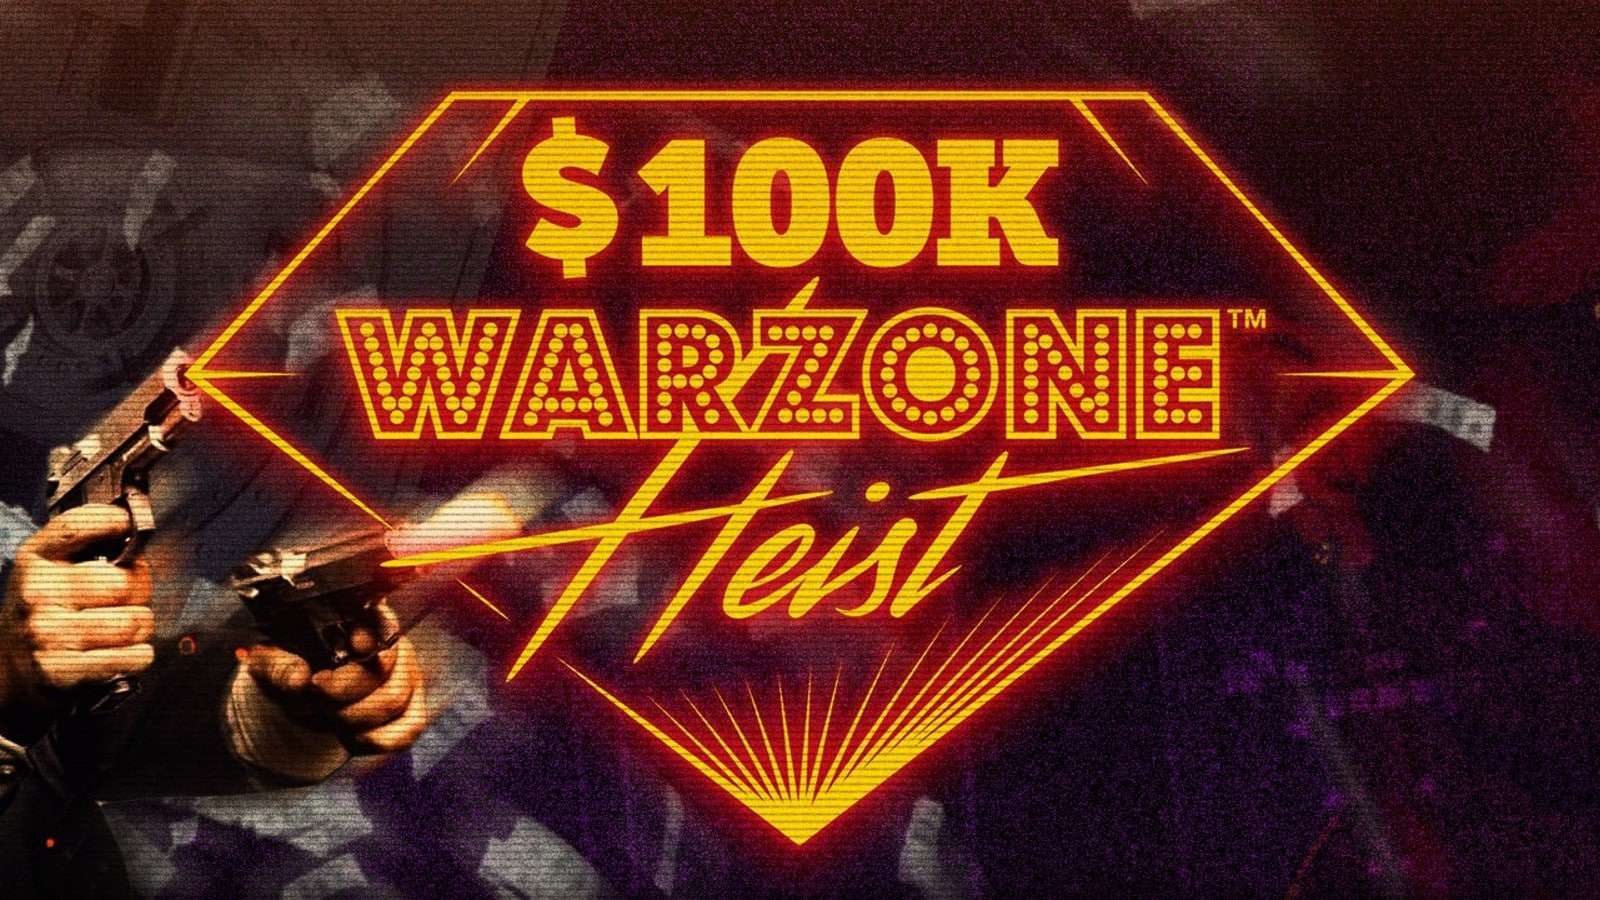 Warzone $100k heist tournament